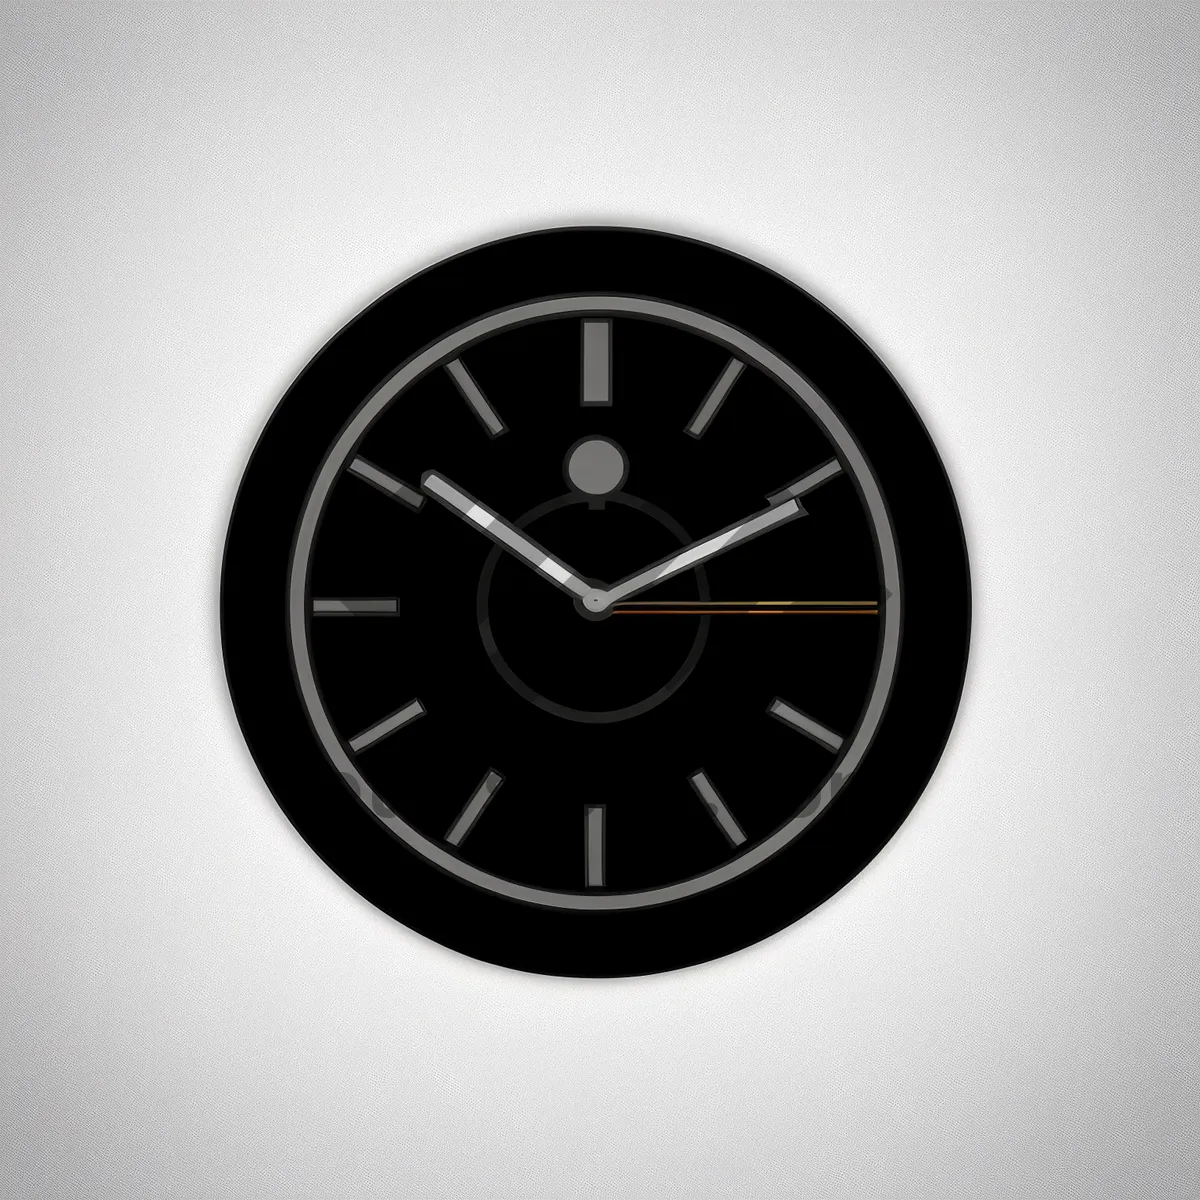 Picture of Modern Black Round Analog Clock Button - Timepiece Symbol